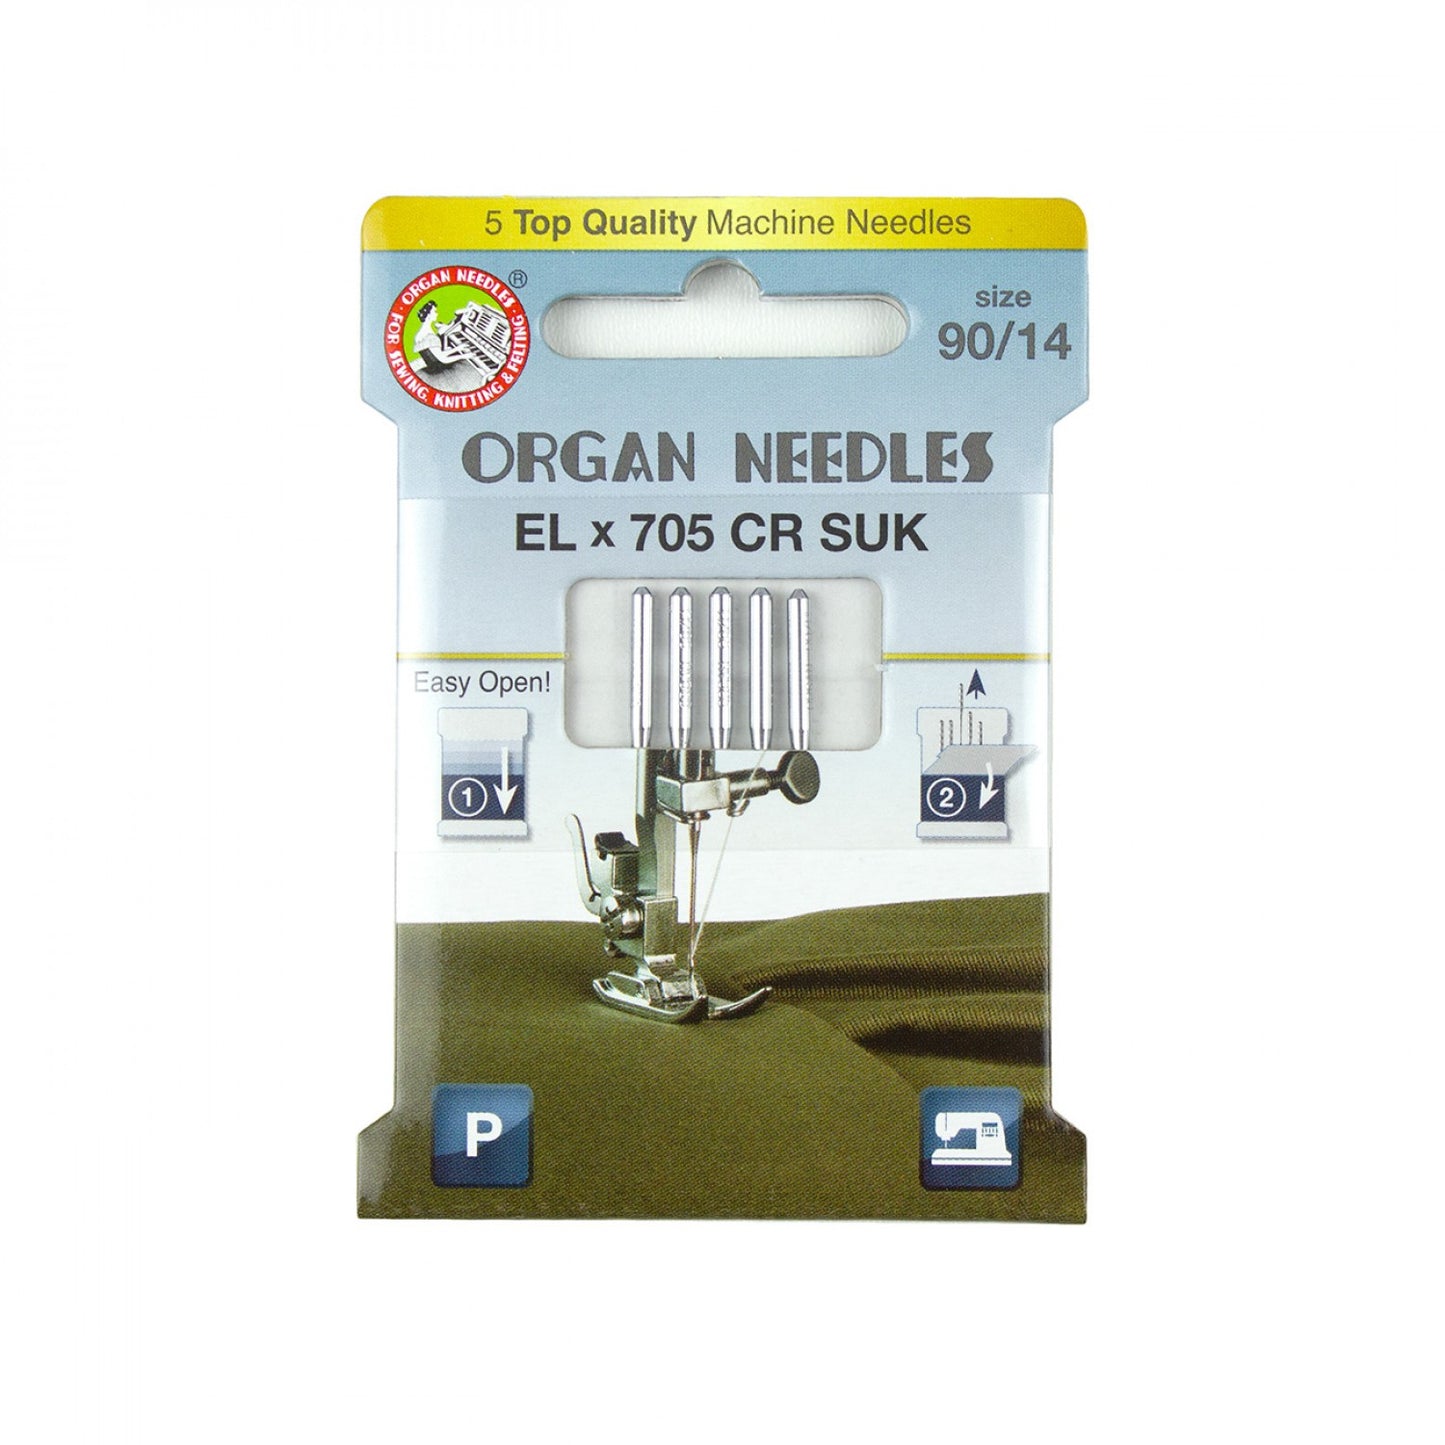 ORGAN Brand ELx705 Chromium SUK Size 90/14- Serger Needles - 5 Pack